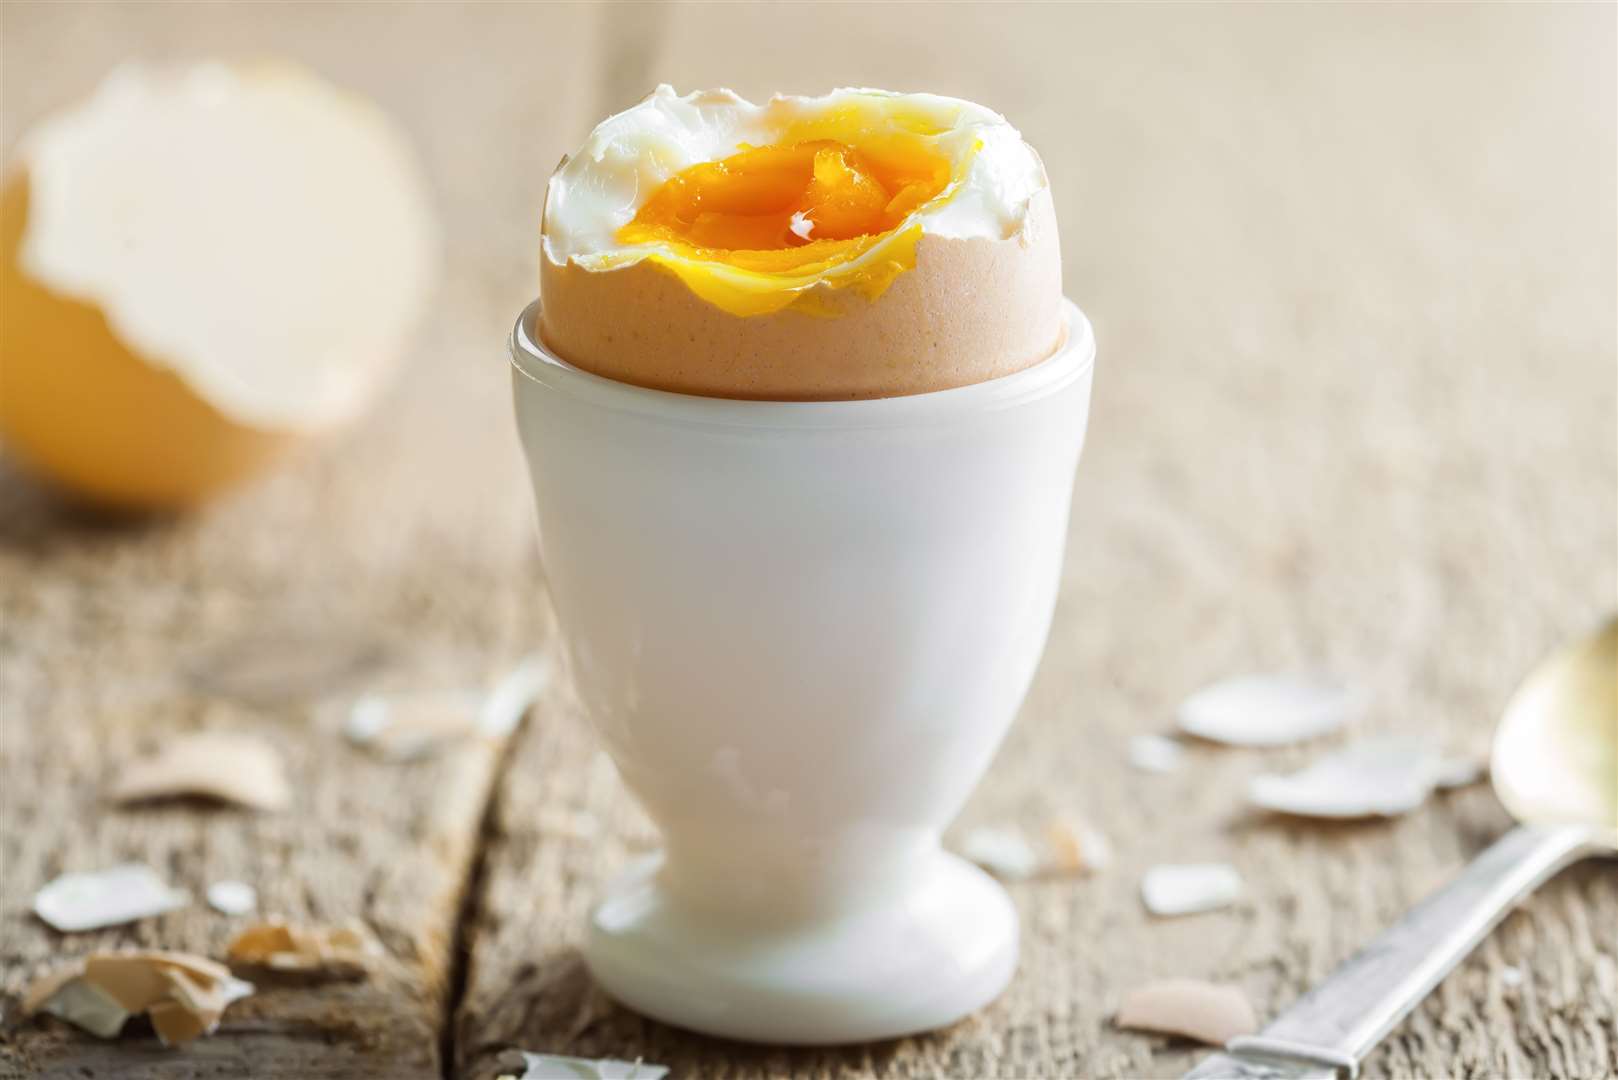 Save those egg shells after breakfast as a protective slug barrier